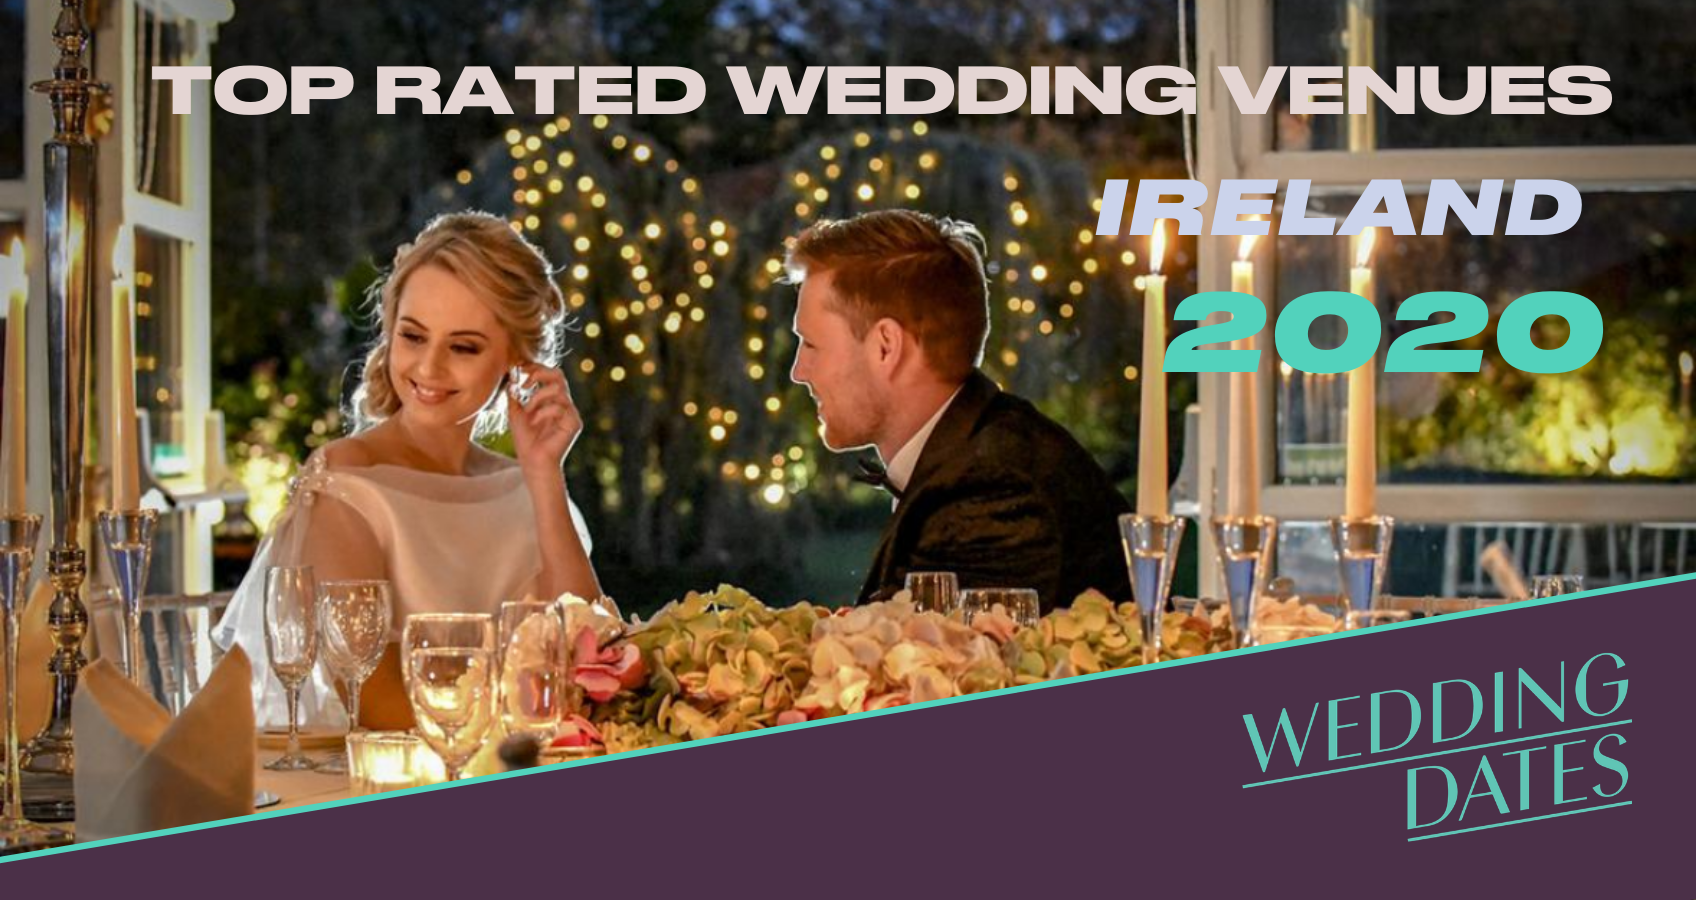 WeddingDates Awards Top Rated Wedding Venues 2020